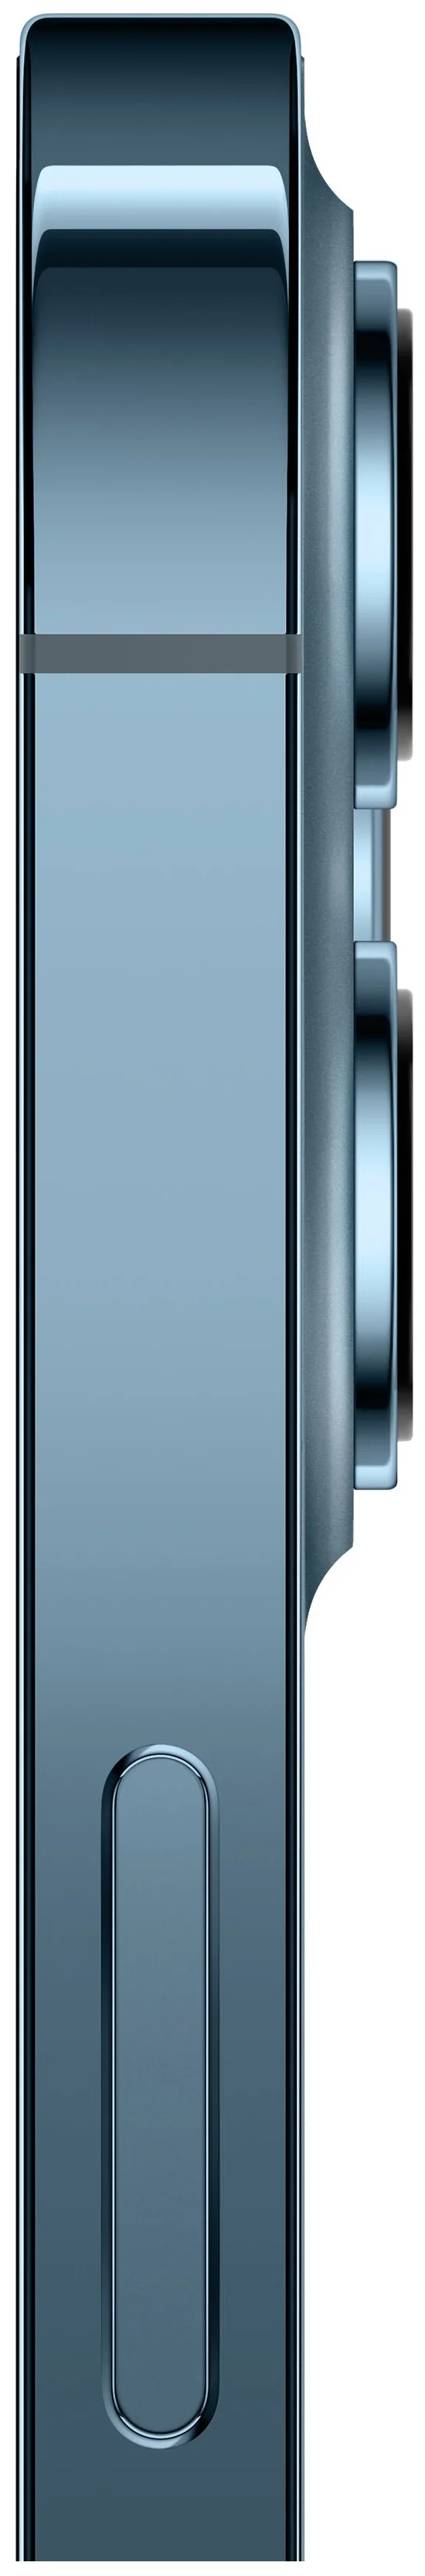 Apple iPhone 12 Pro Max 128GB - аккумулятор: 3687 мА·ч